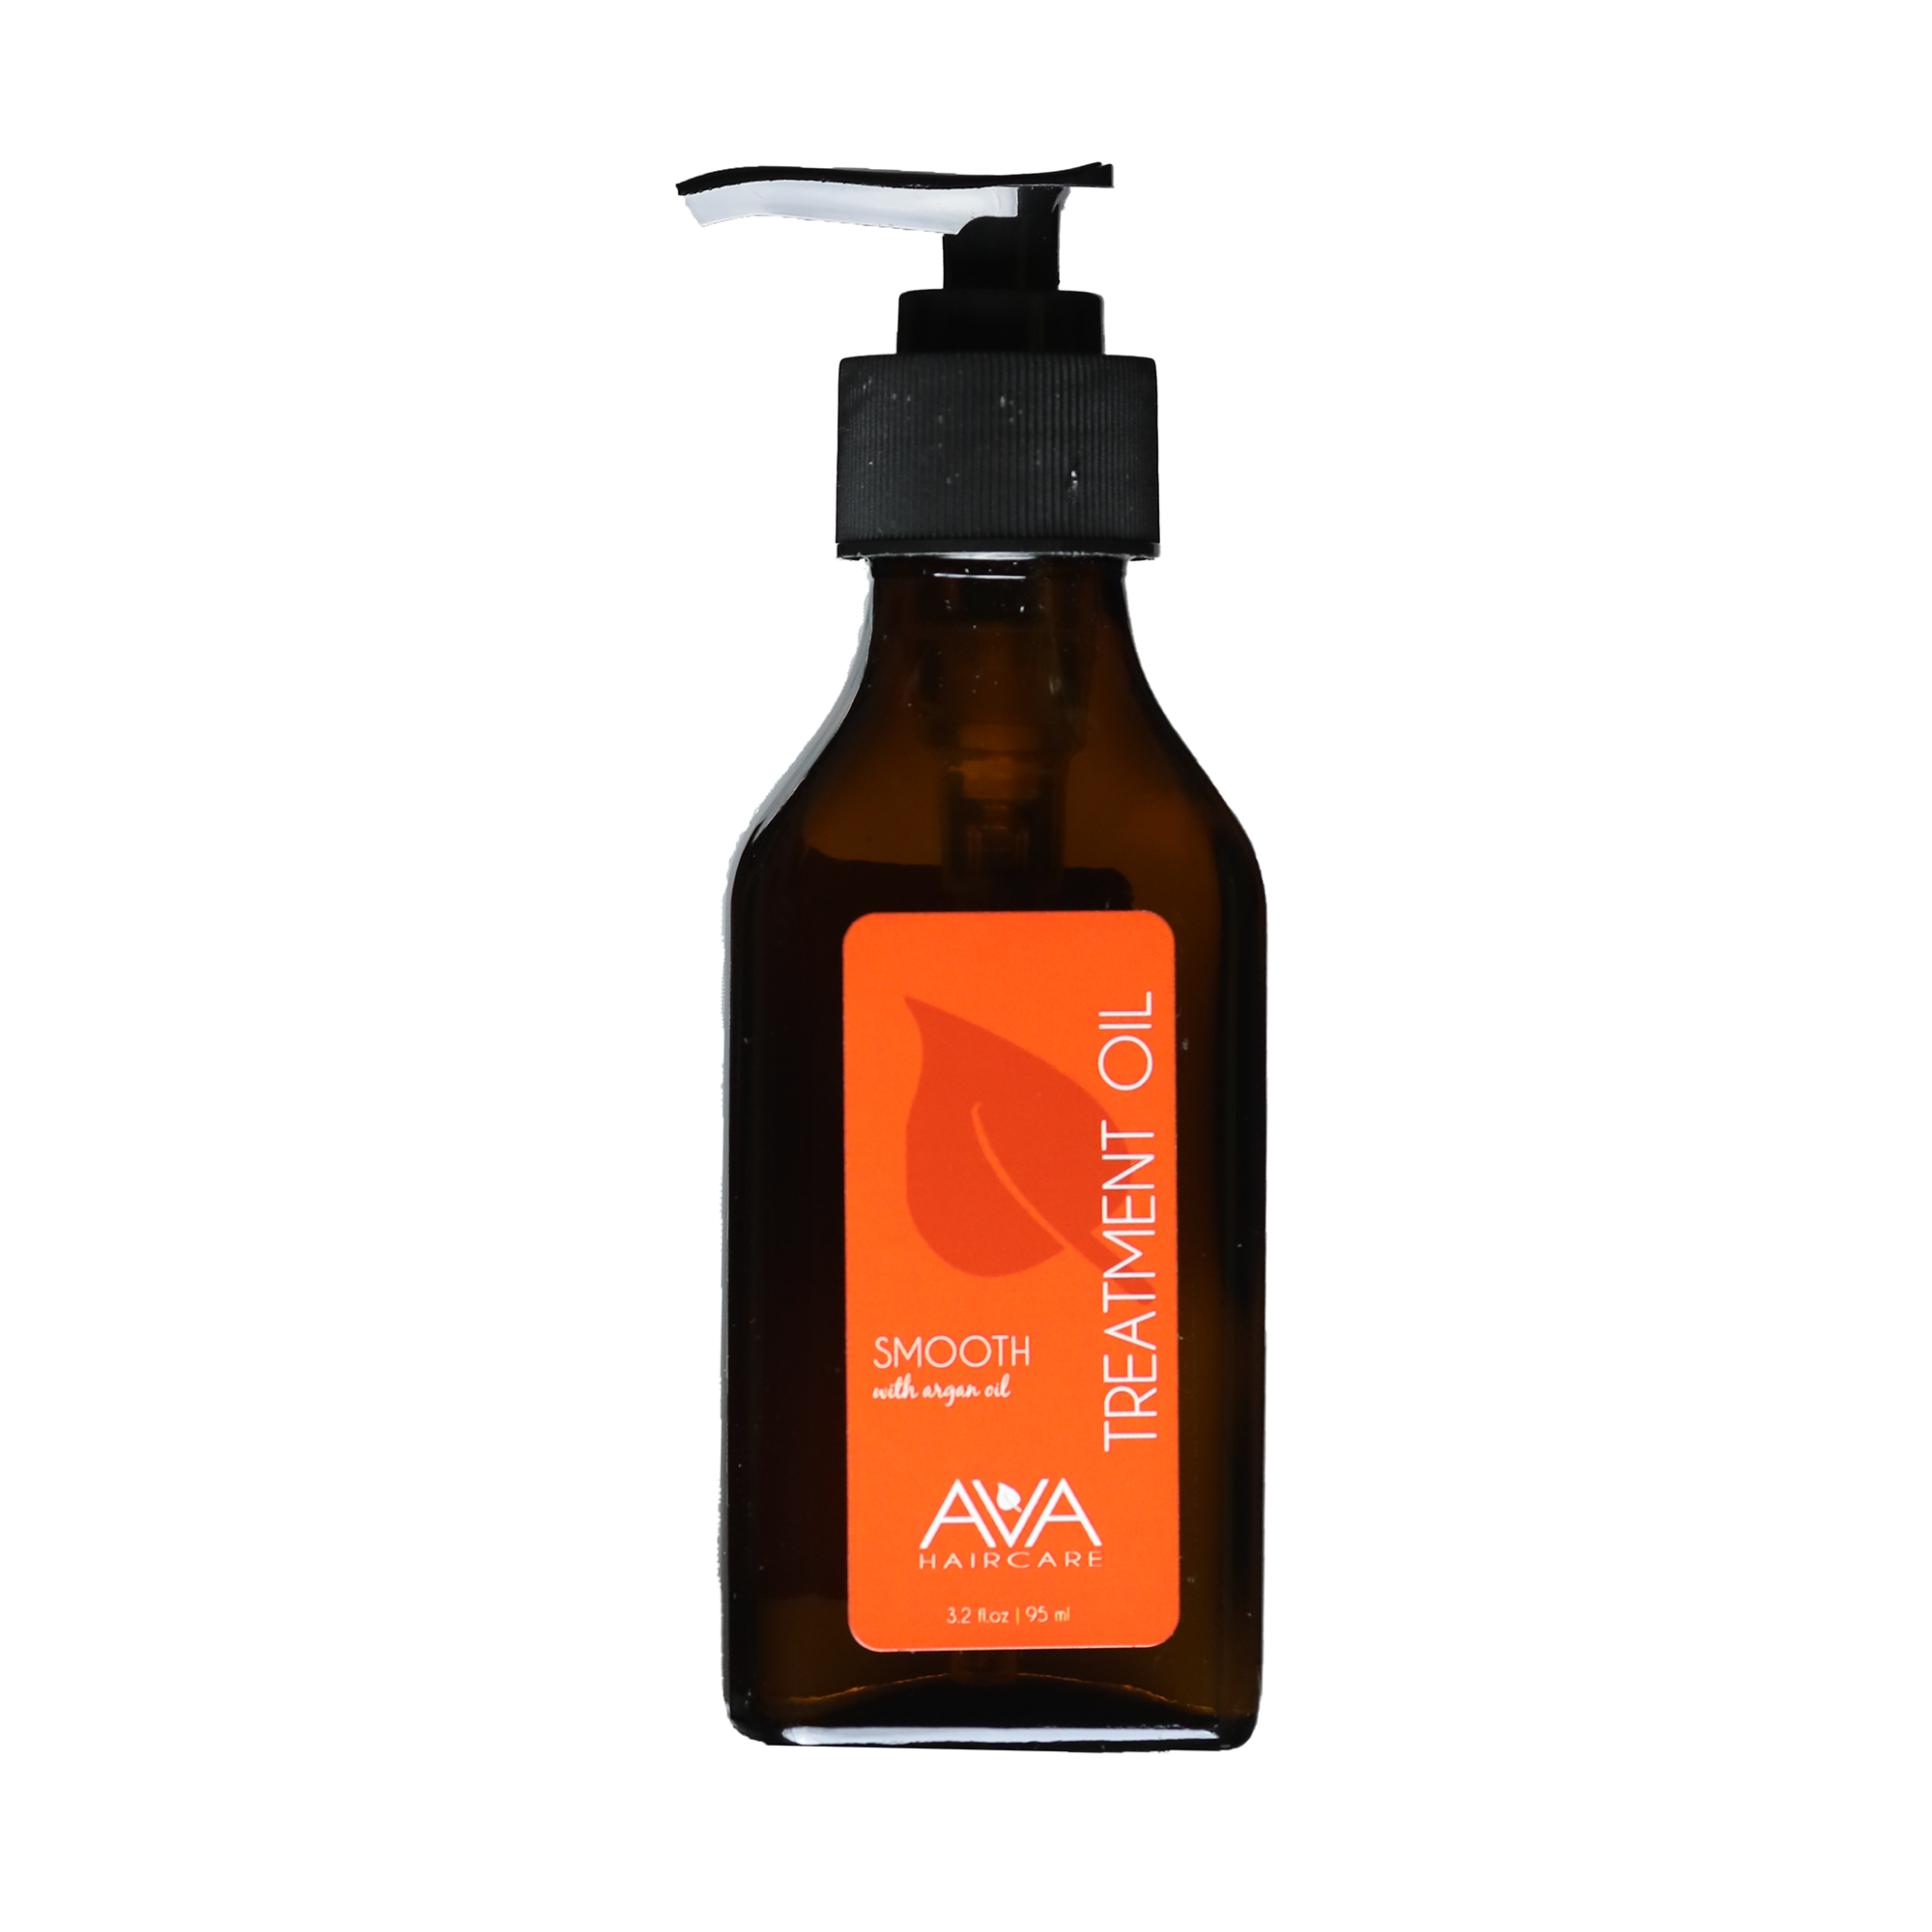 AVA Haircare Hair Oil 3.2oz / 3.2OZ